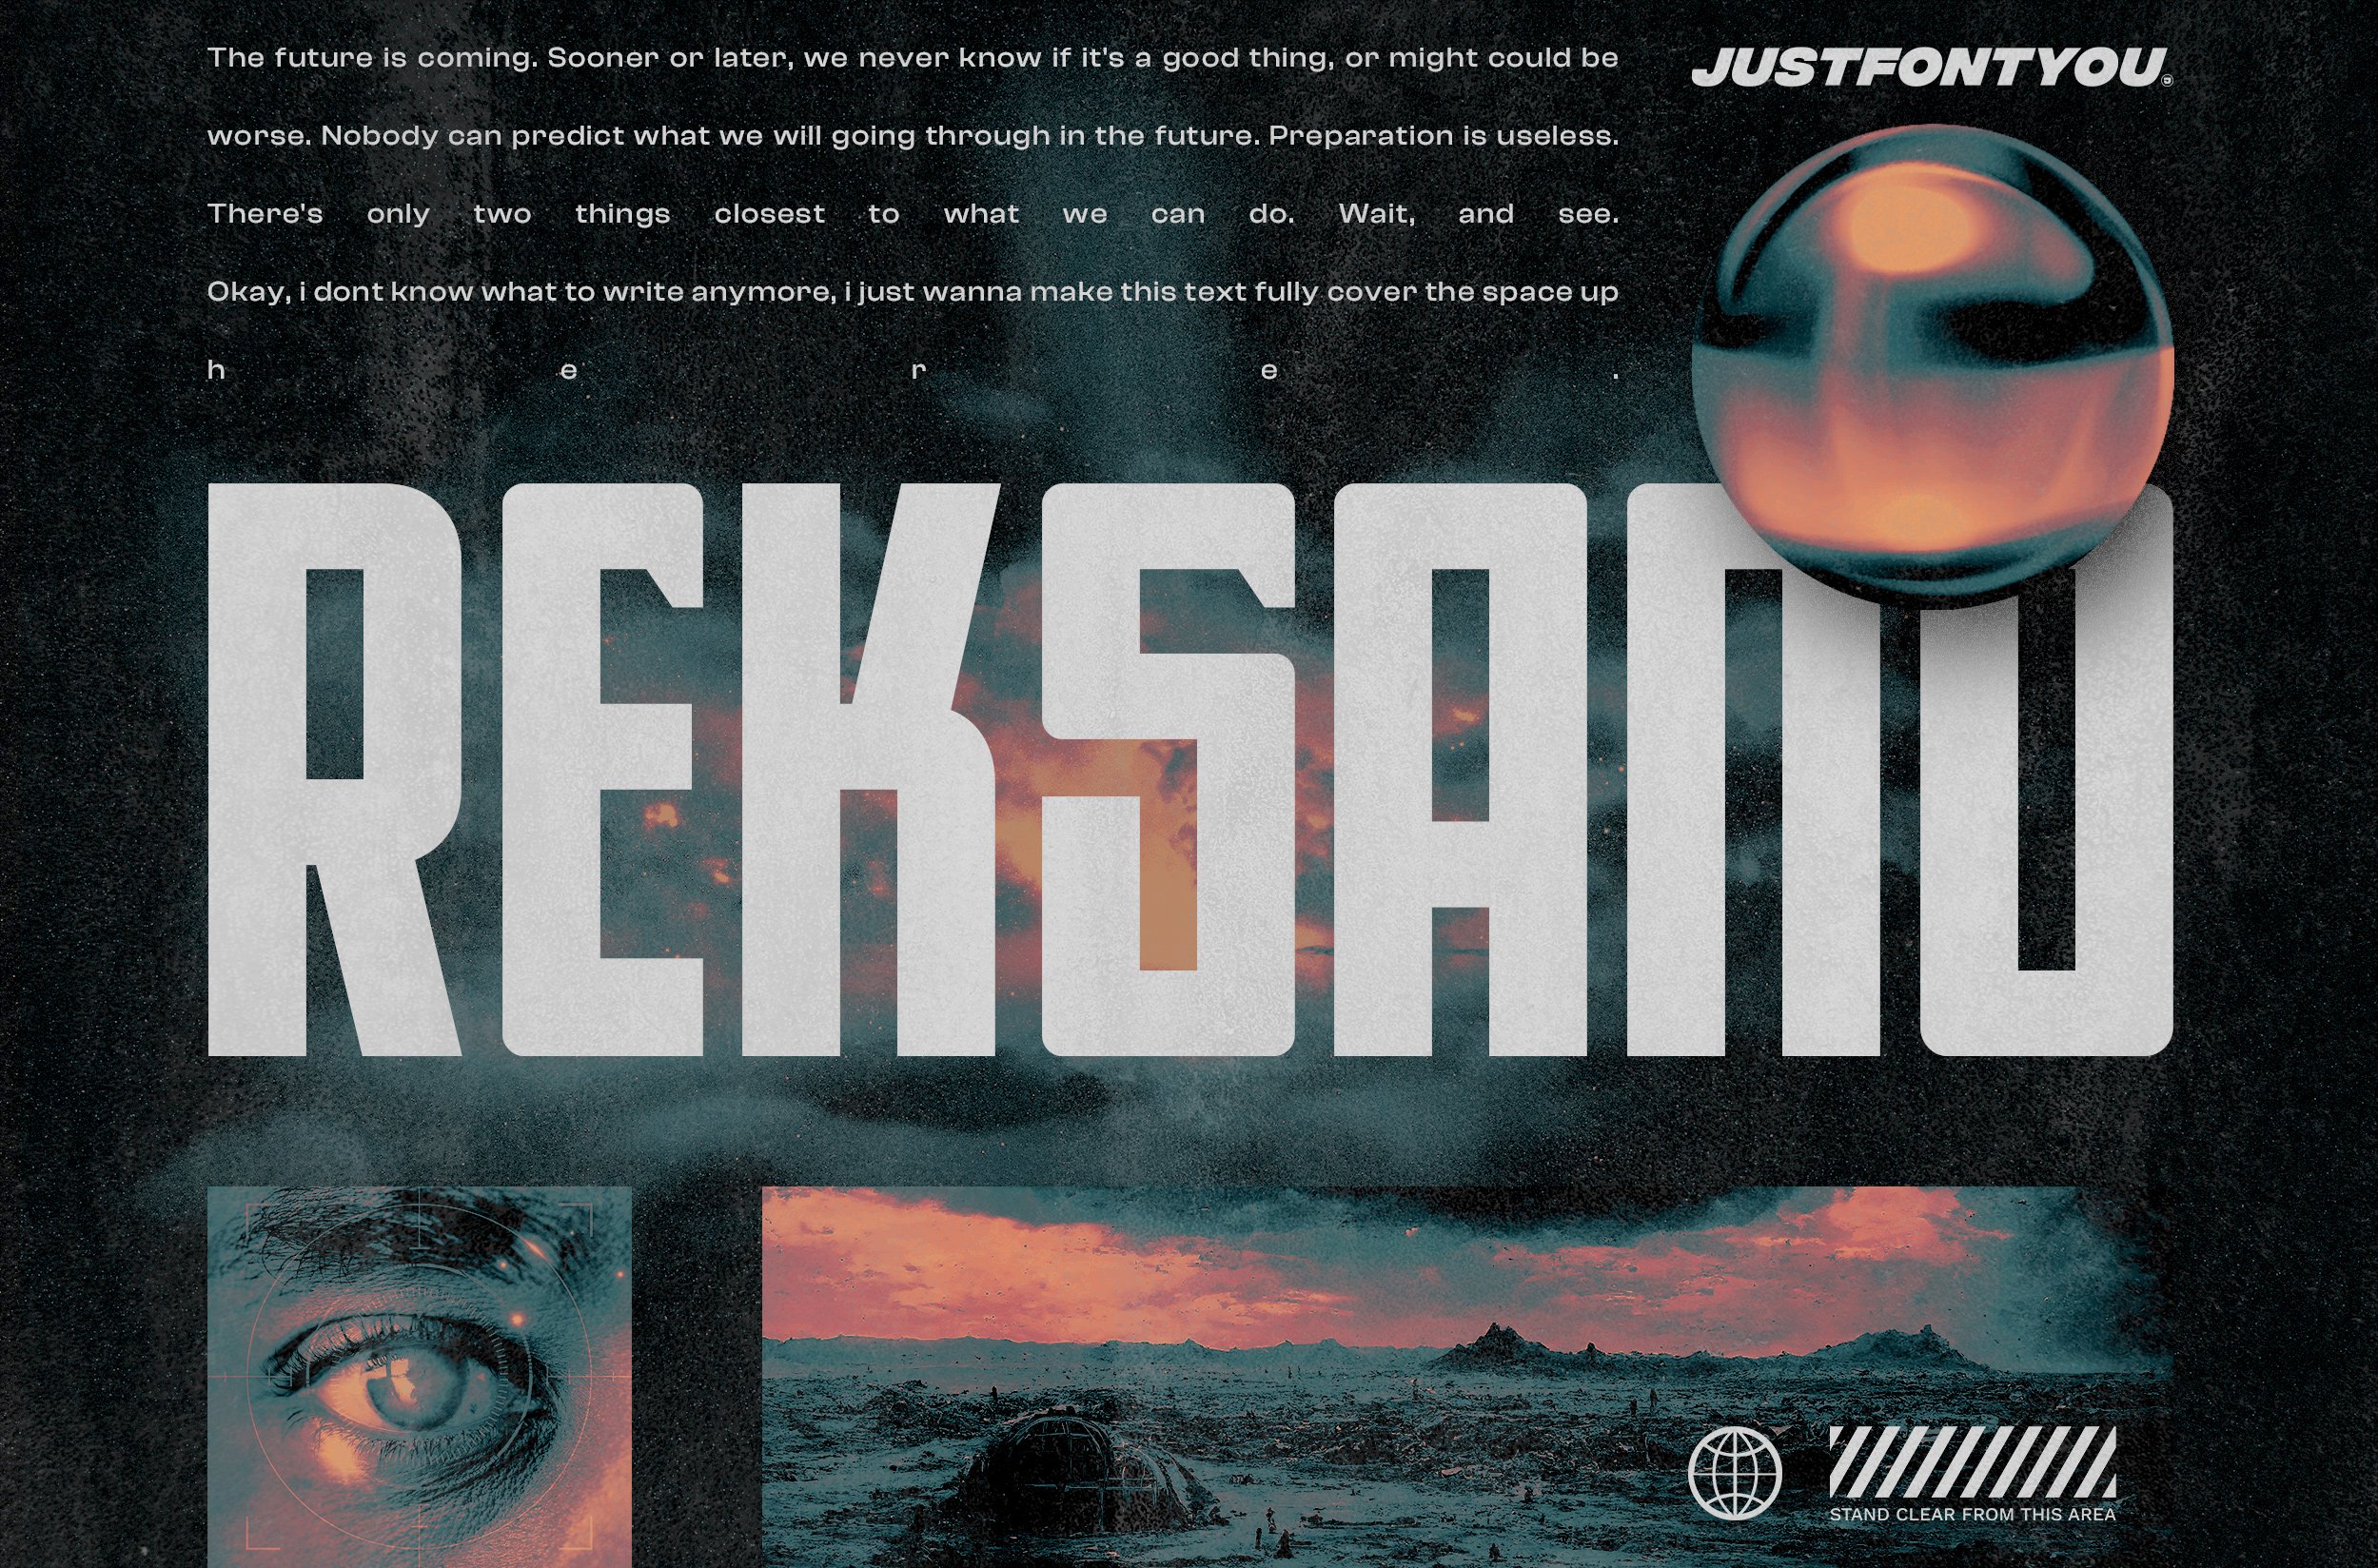 Reksano - Futuristic Display Fonts cover image.